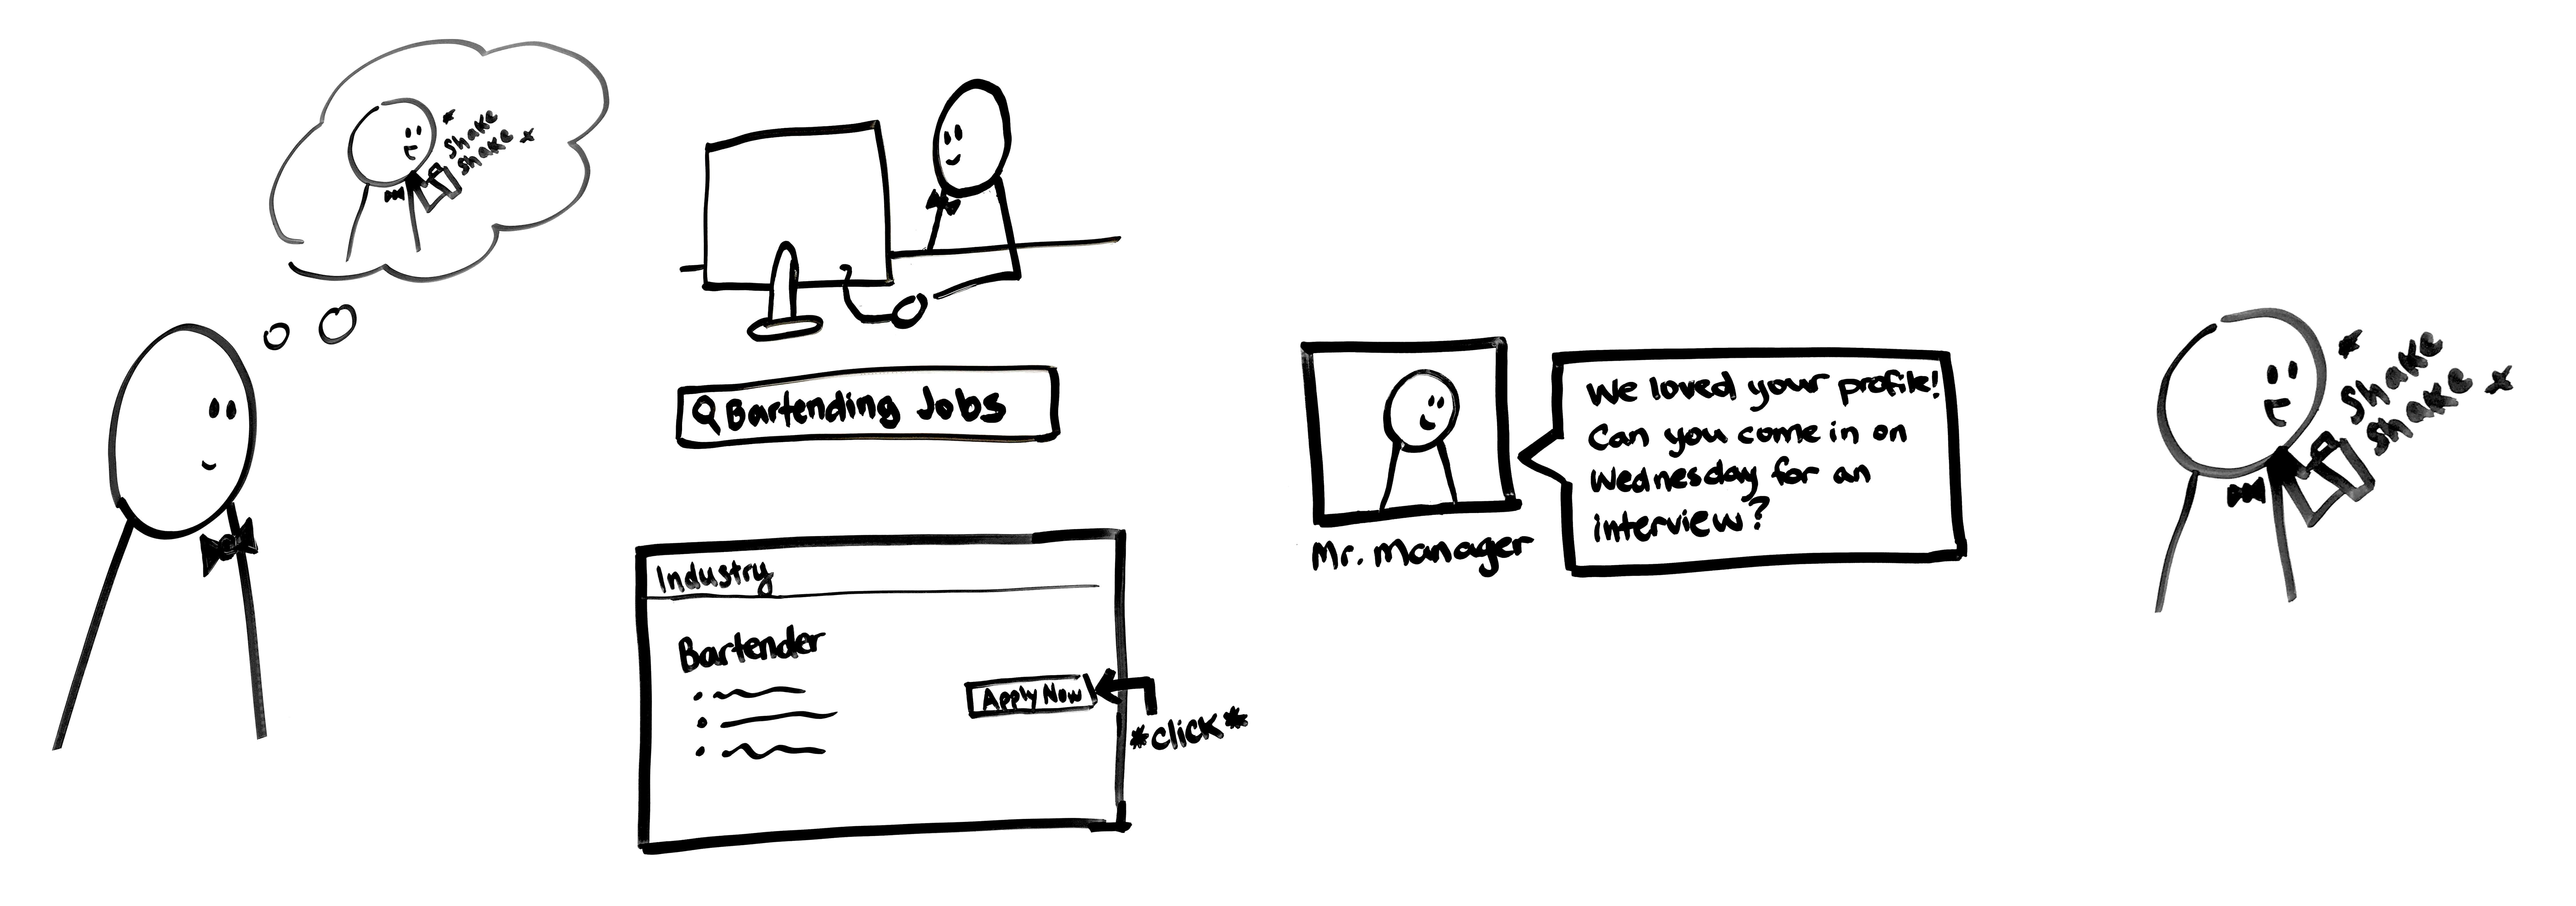 Storyboard showing Job Seeker applying to a job posting on Industry